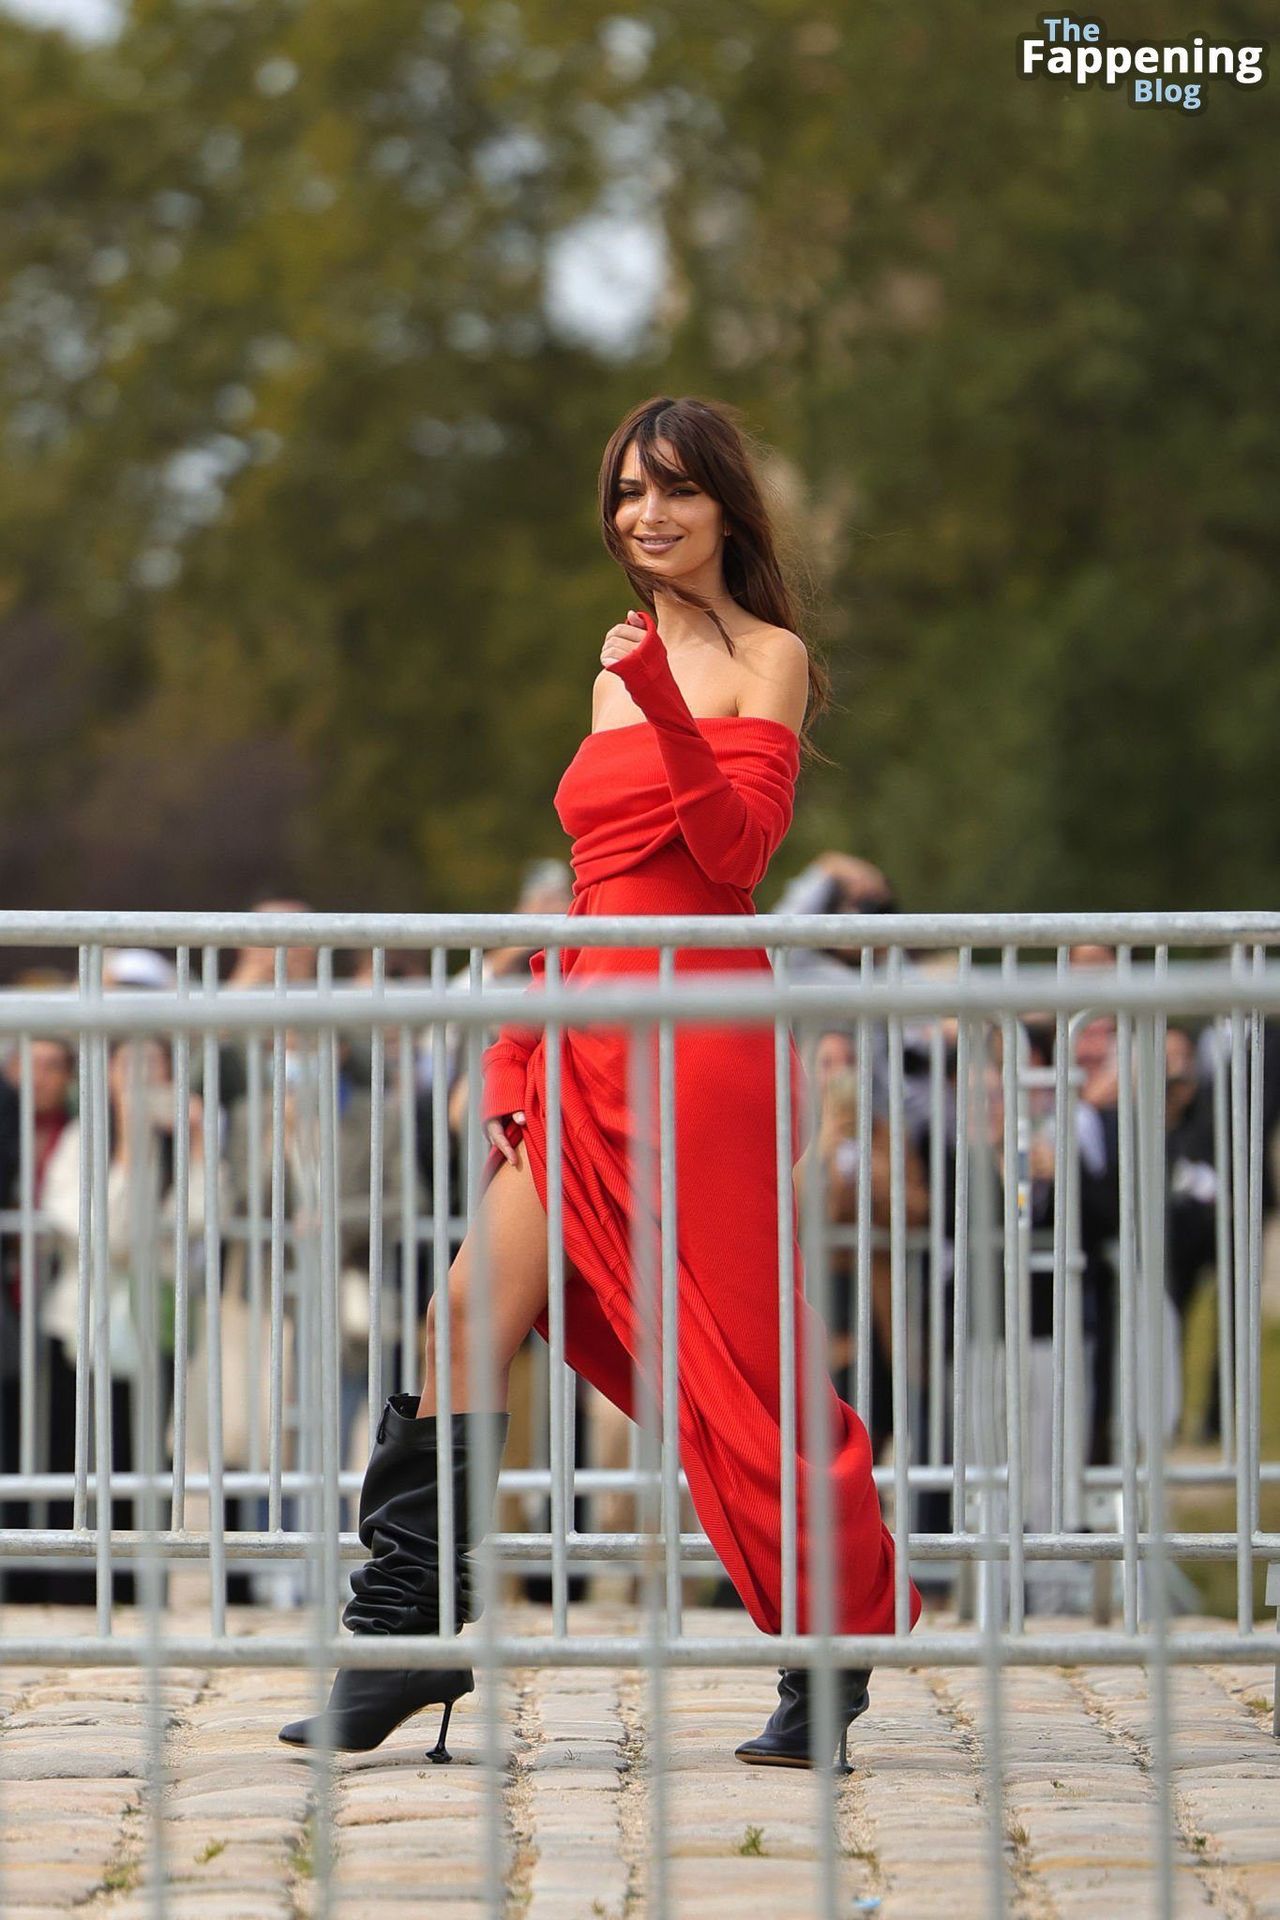 Emily Ratajkowski Looks Hot in a Red Dress (64 Photos)